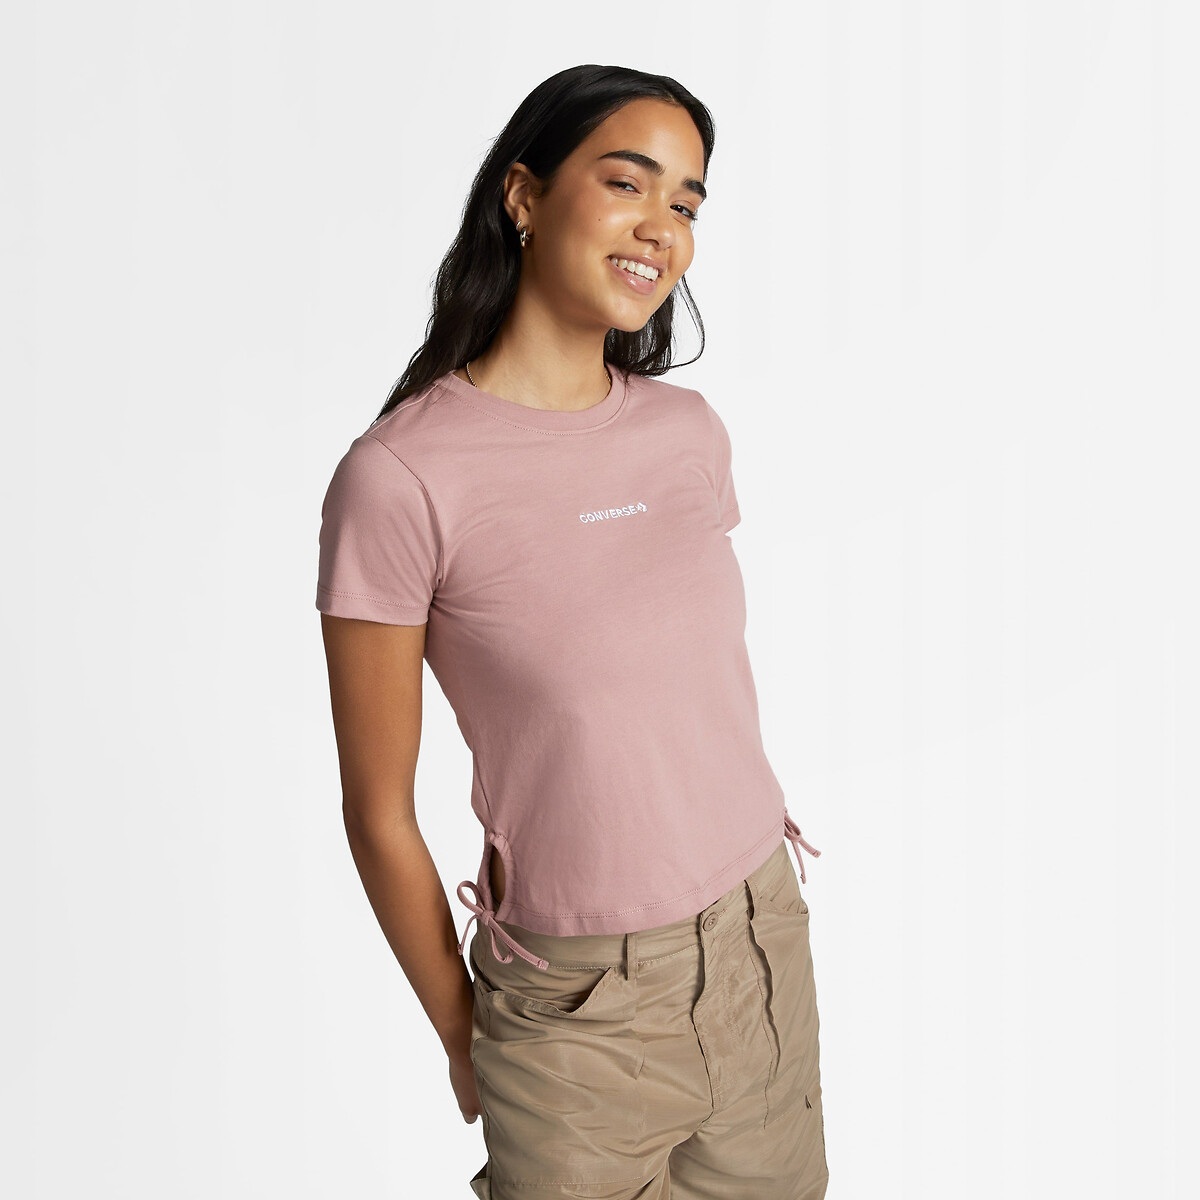 Wordmark Fashion Novelty T-Shirt in Cotton